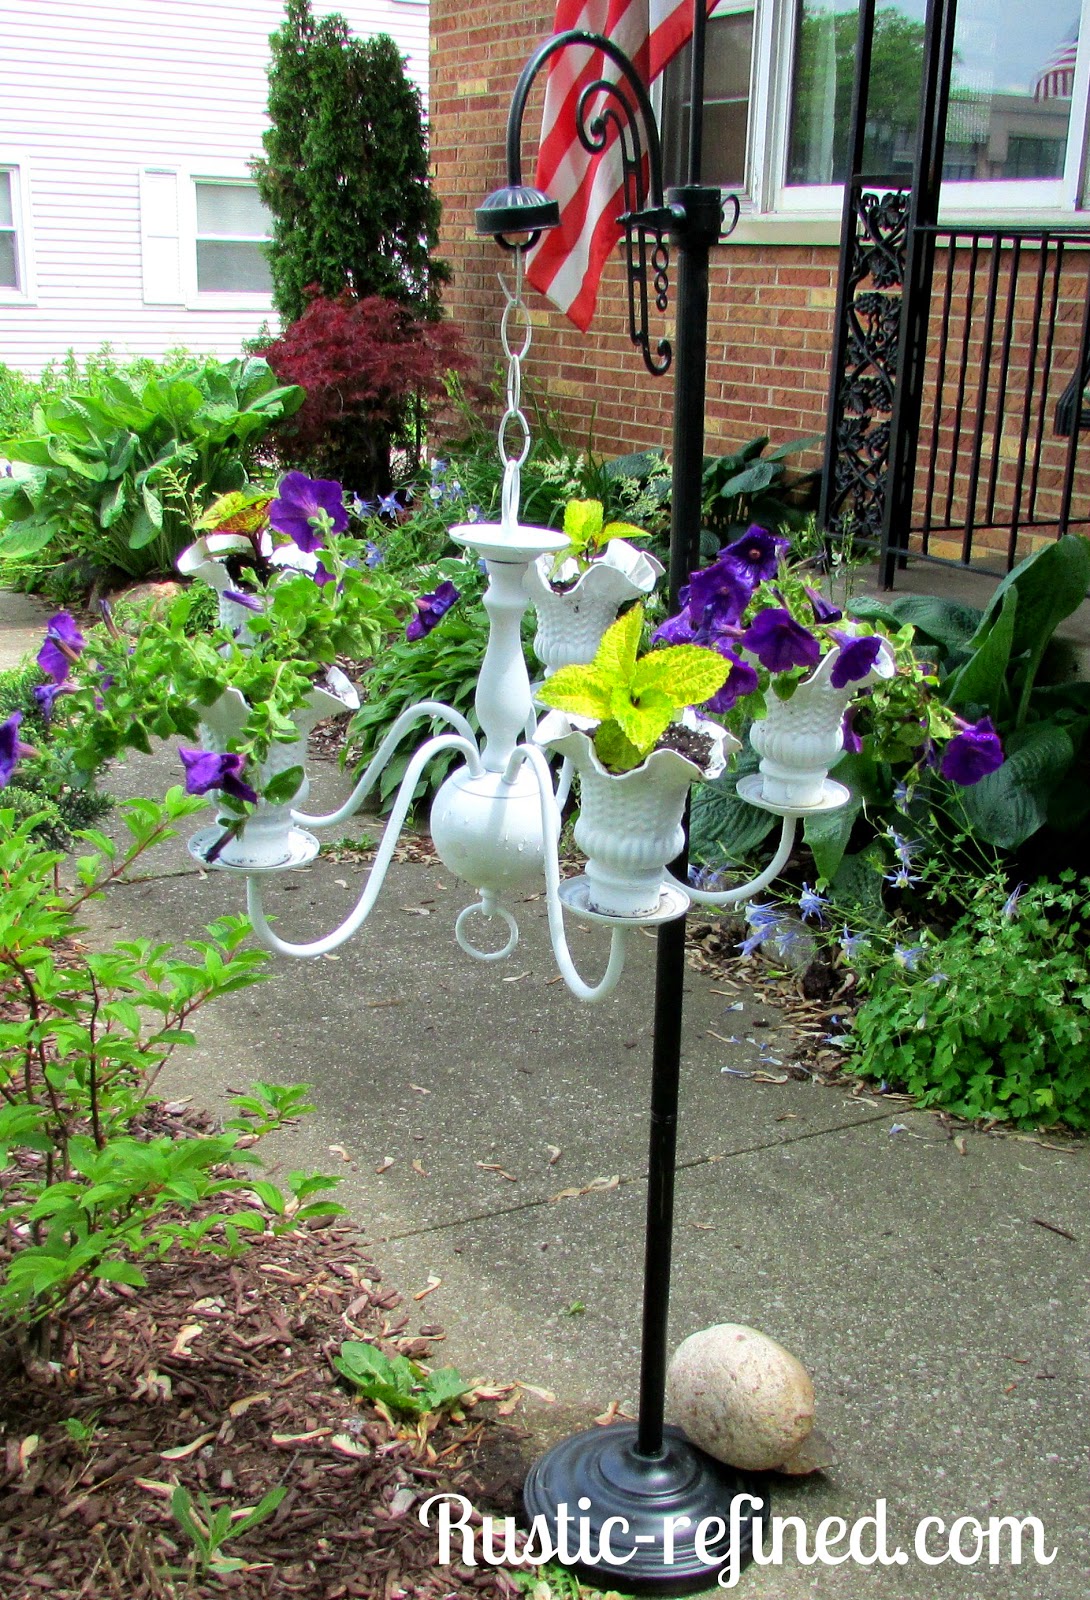 Garden Art - A Flower Chandelier @ Rustic-refined.com